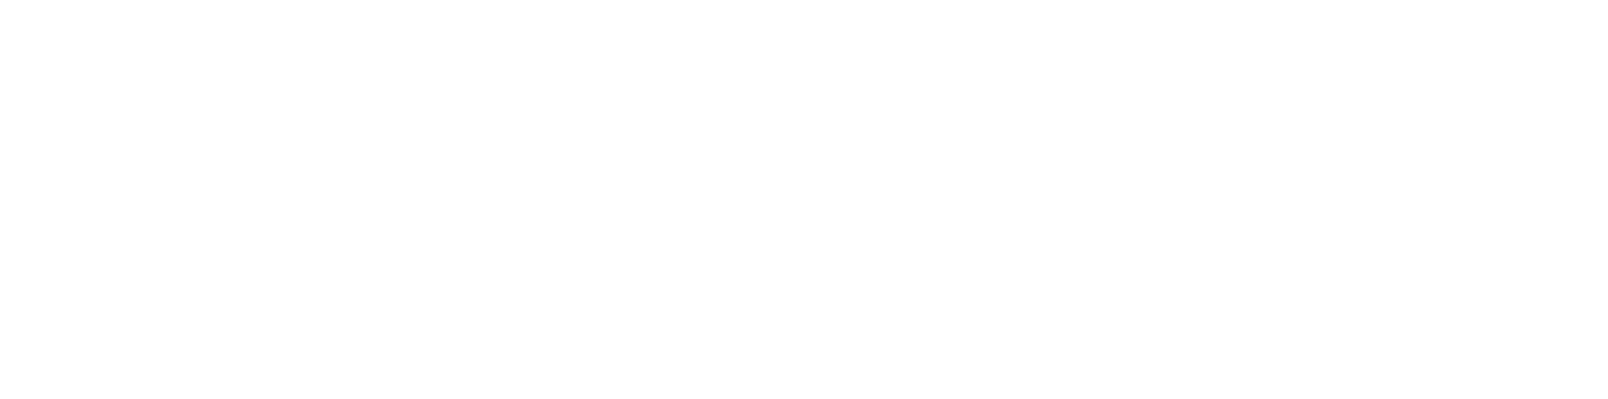 Pino-Global-Enter-Ctr-hrz-FIU-bw-rev